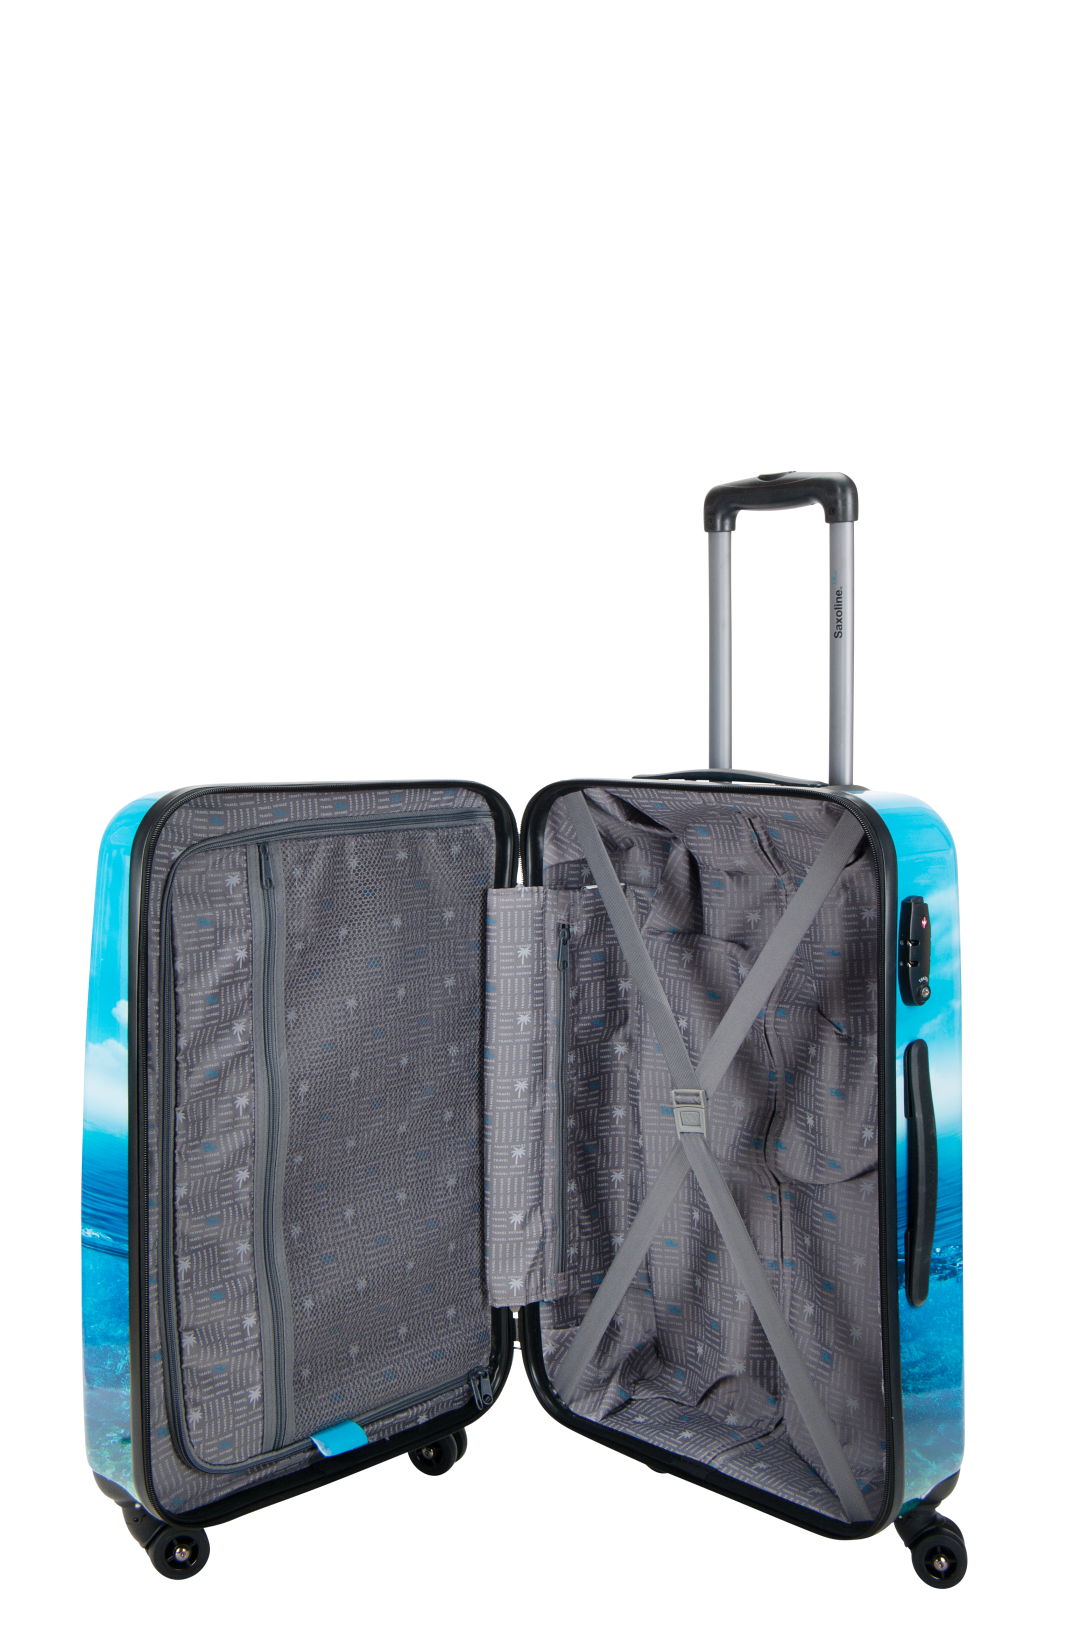 Saxoline Blue - Binnenkant Island Print hard reiskoffer | luggage4u.be